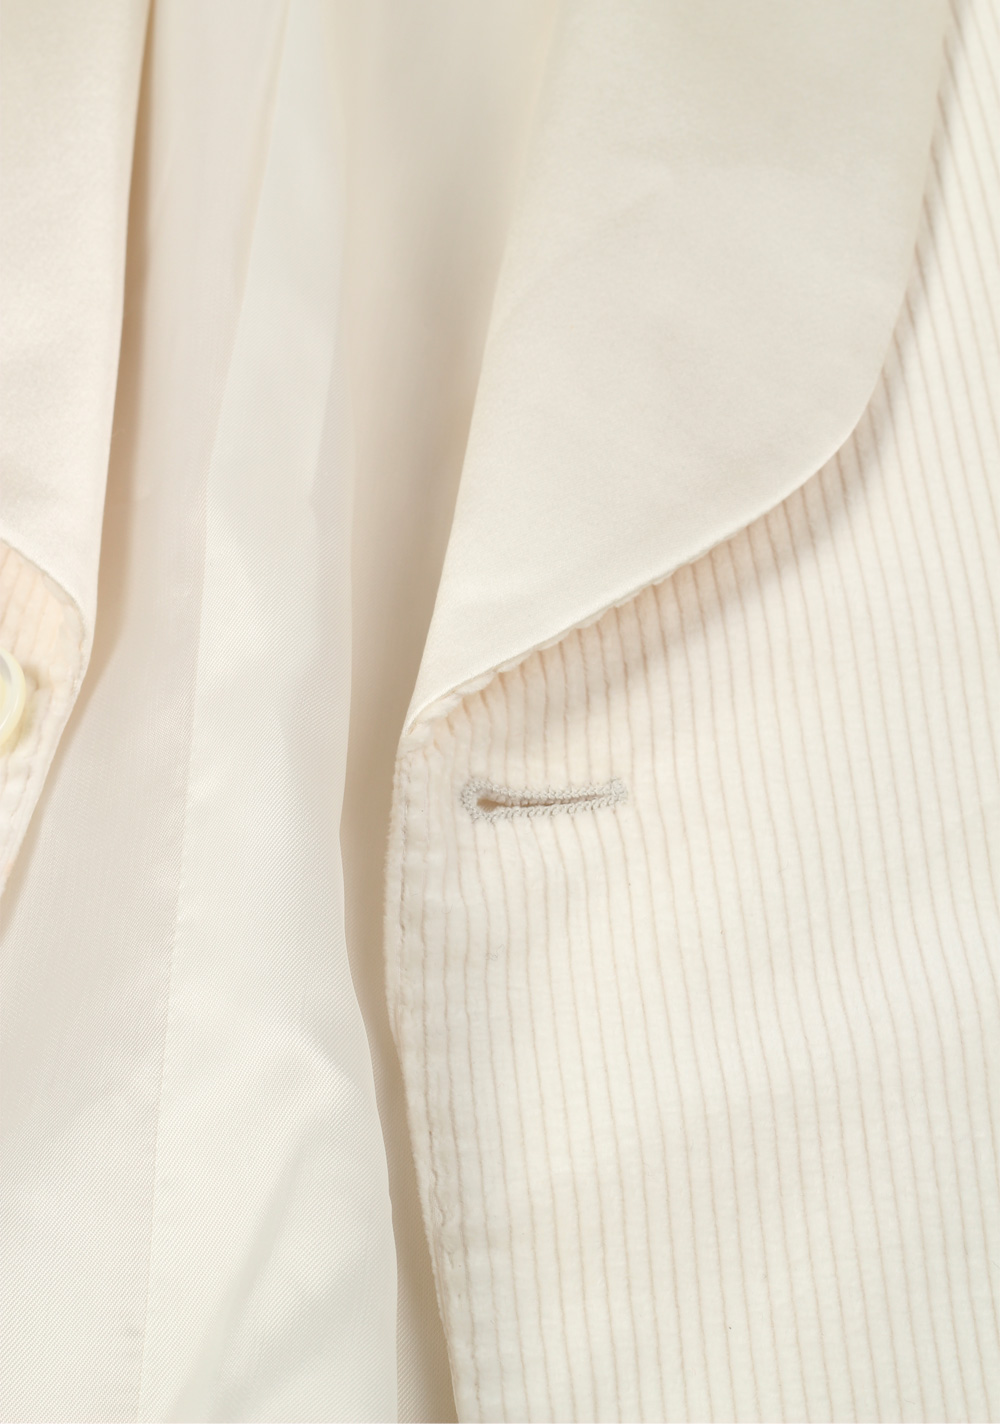 Brunello Ccinelli Ivory Signature Tuxedo Dinner Jacket Size 50 / 40R U.S. | Costume Limité